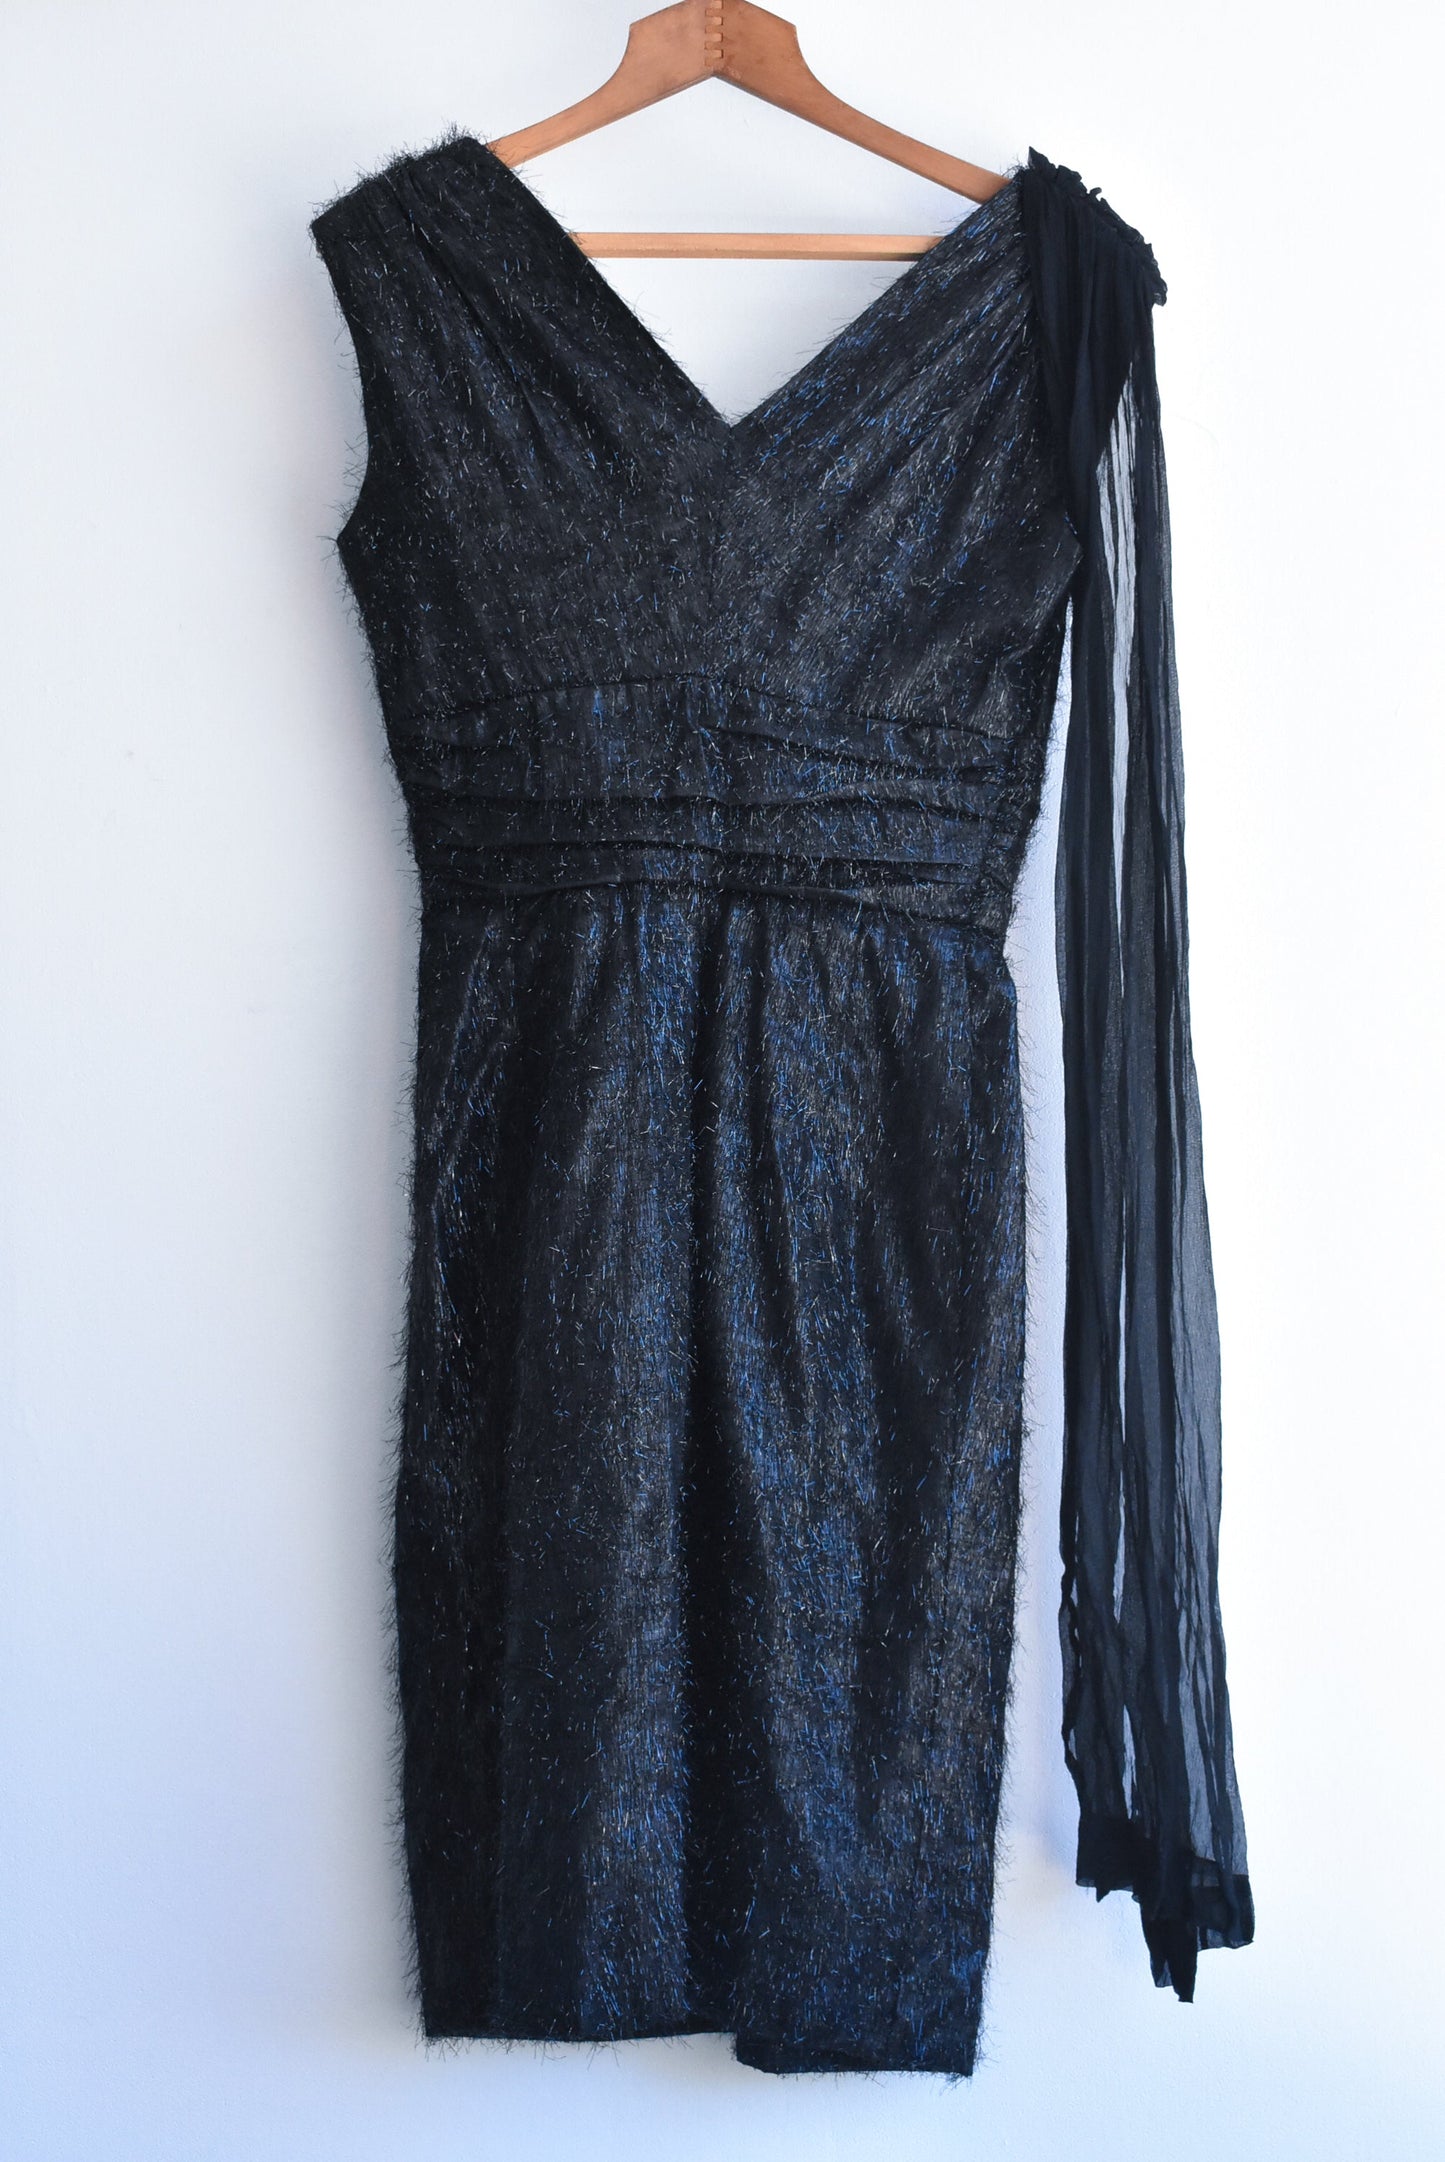 Elegant vintage fluffy lurex dress, size 6-8